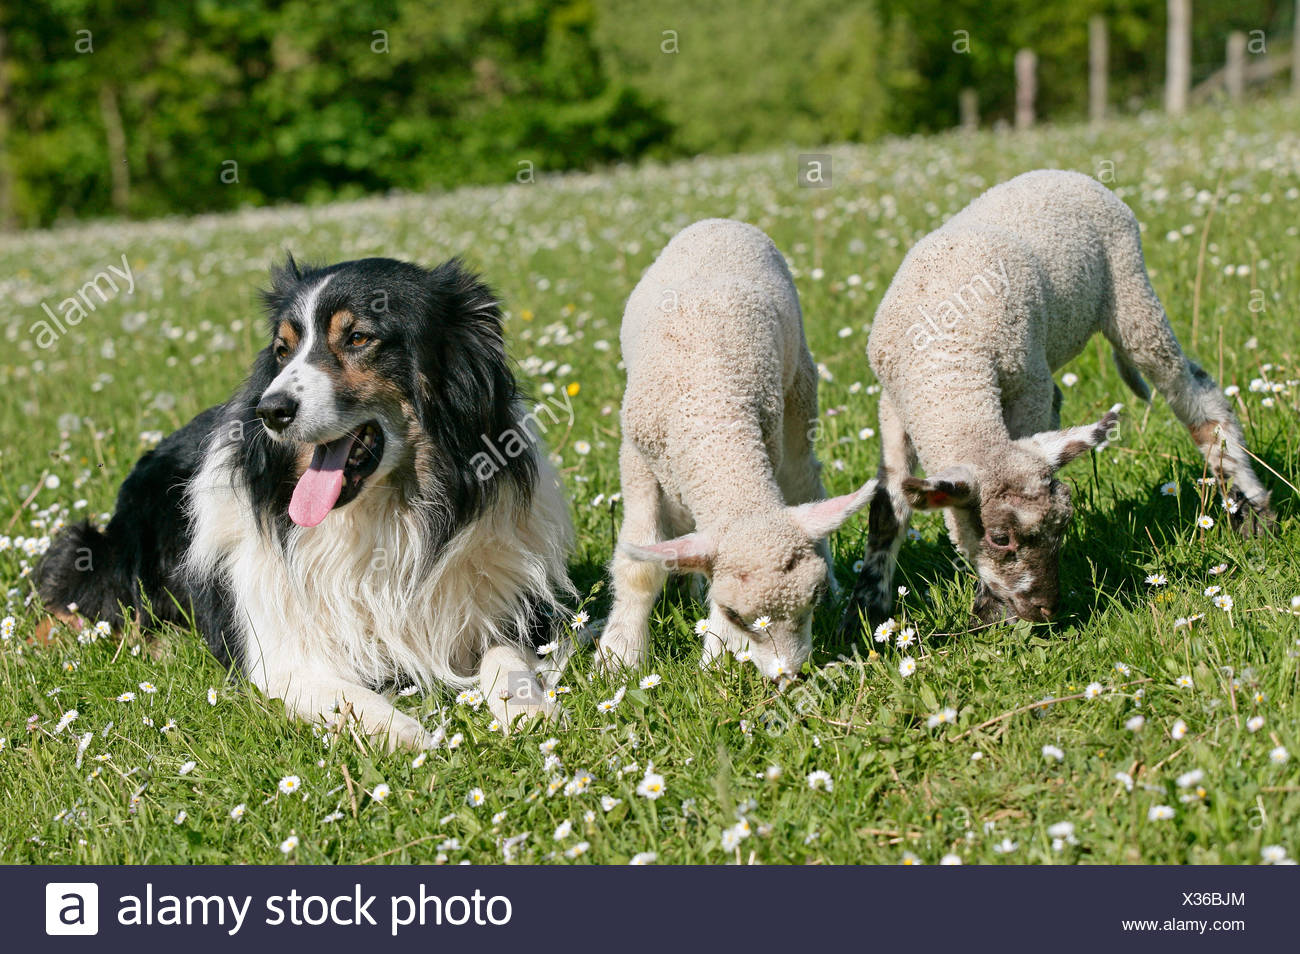 merino sheep dog